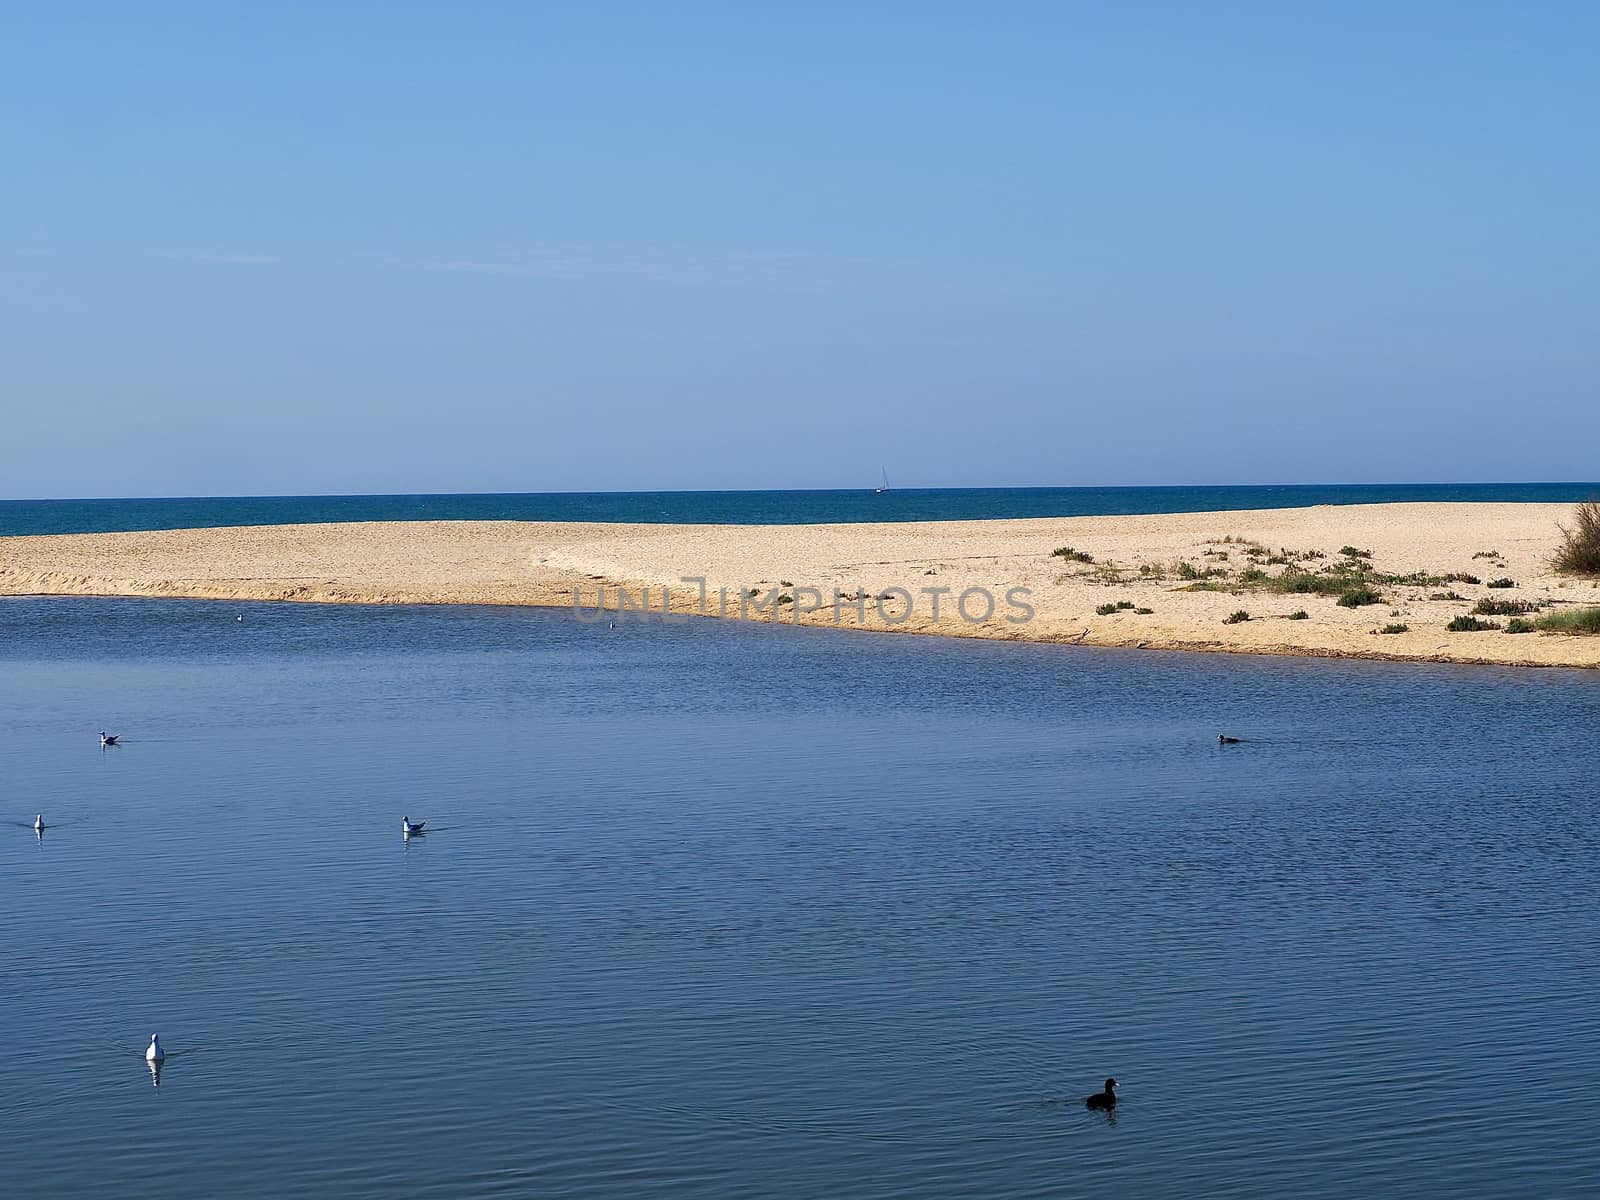 Lagoa dos Salgados, a biotope between Armacaou de Pera and Albufeira at the Algarve coast of Portugal